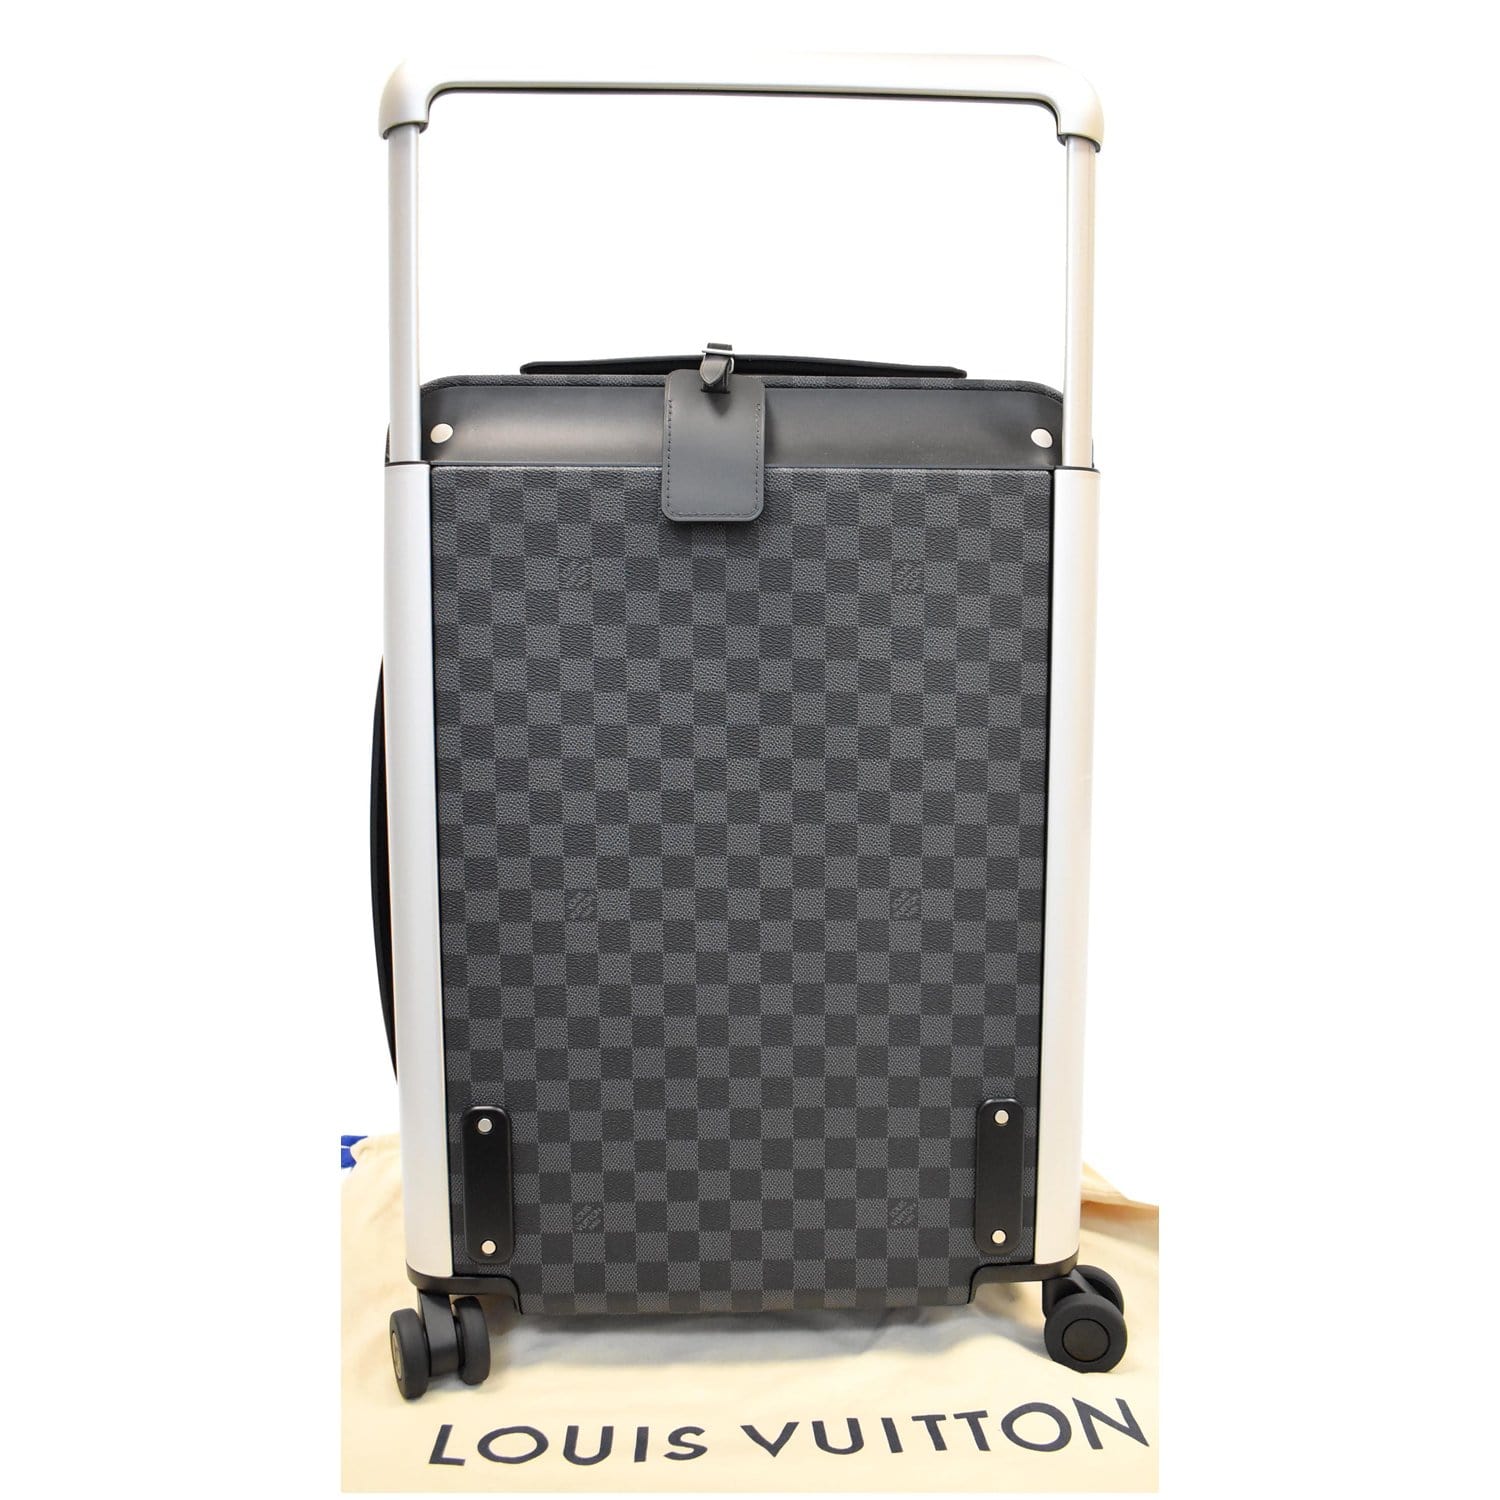 Louis Vuitton Suitcase - Horizon 55 Damier